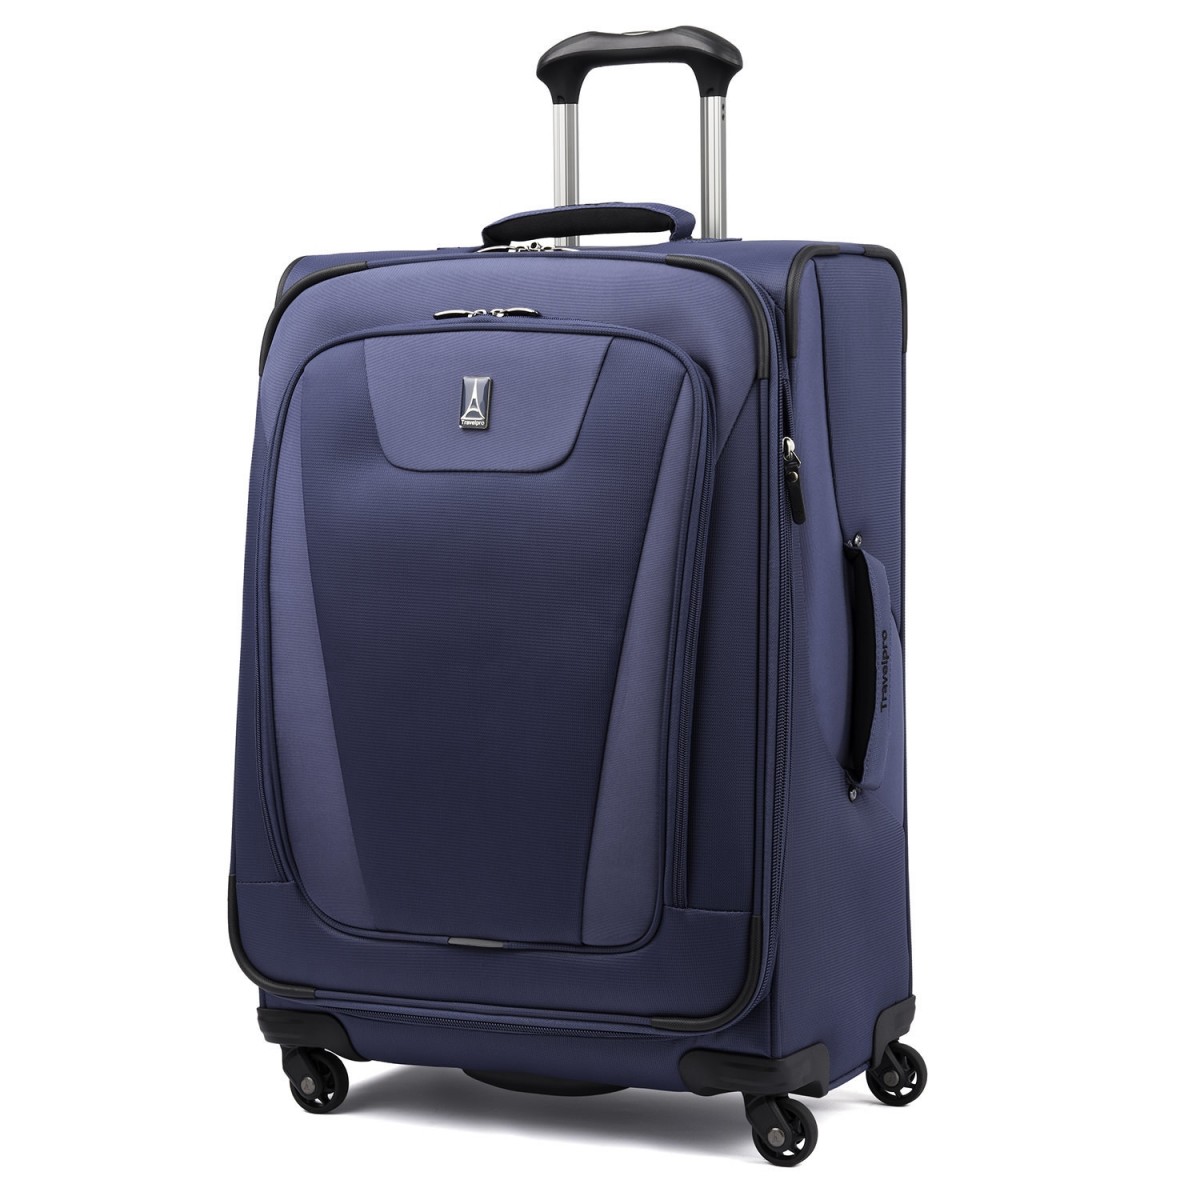 travelpro maxlite 4 25" luggage review